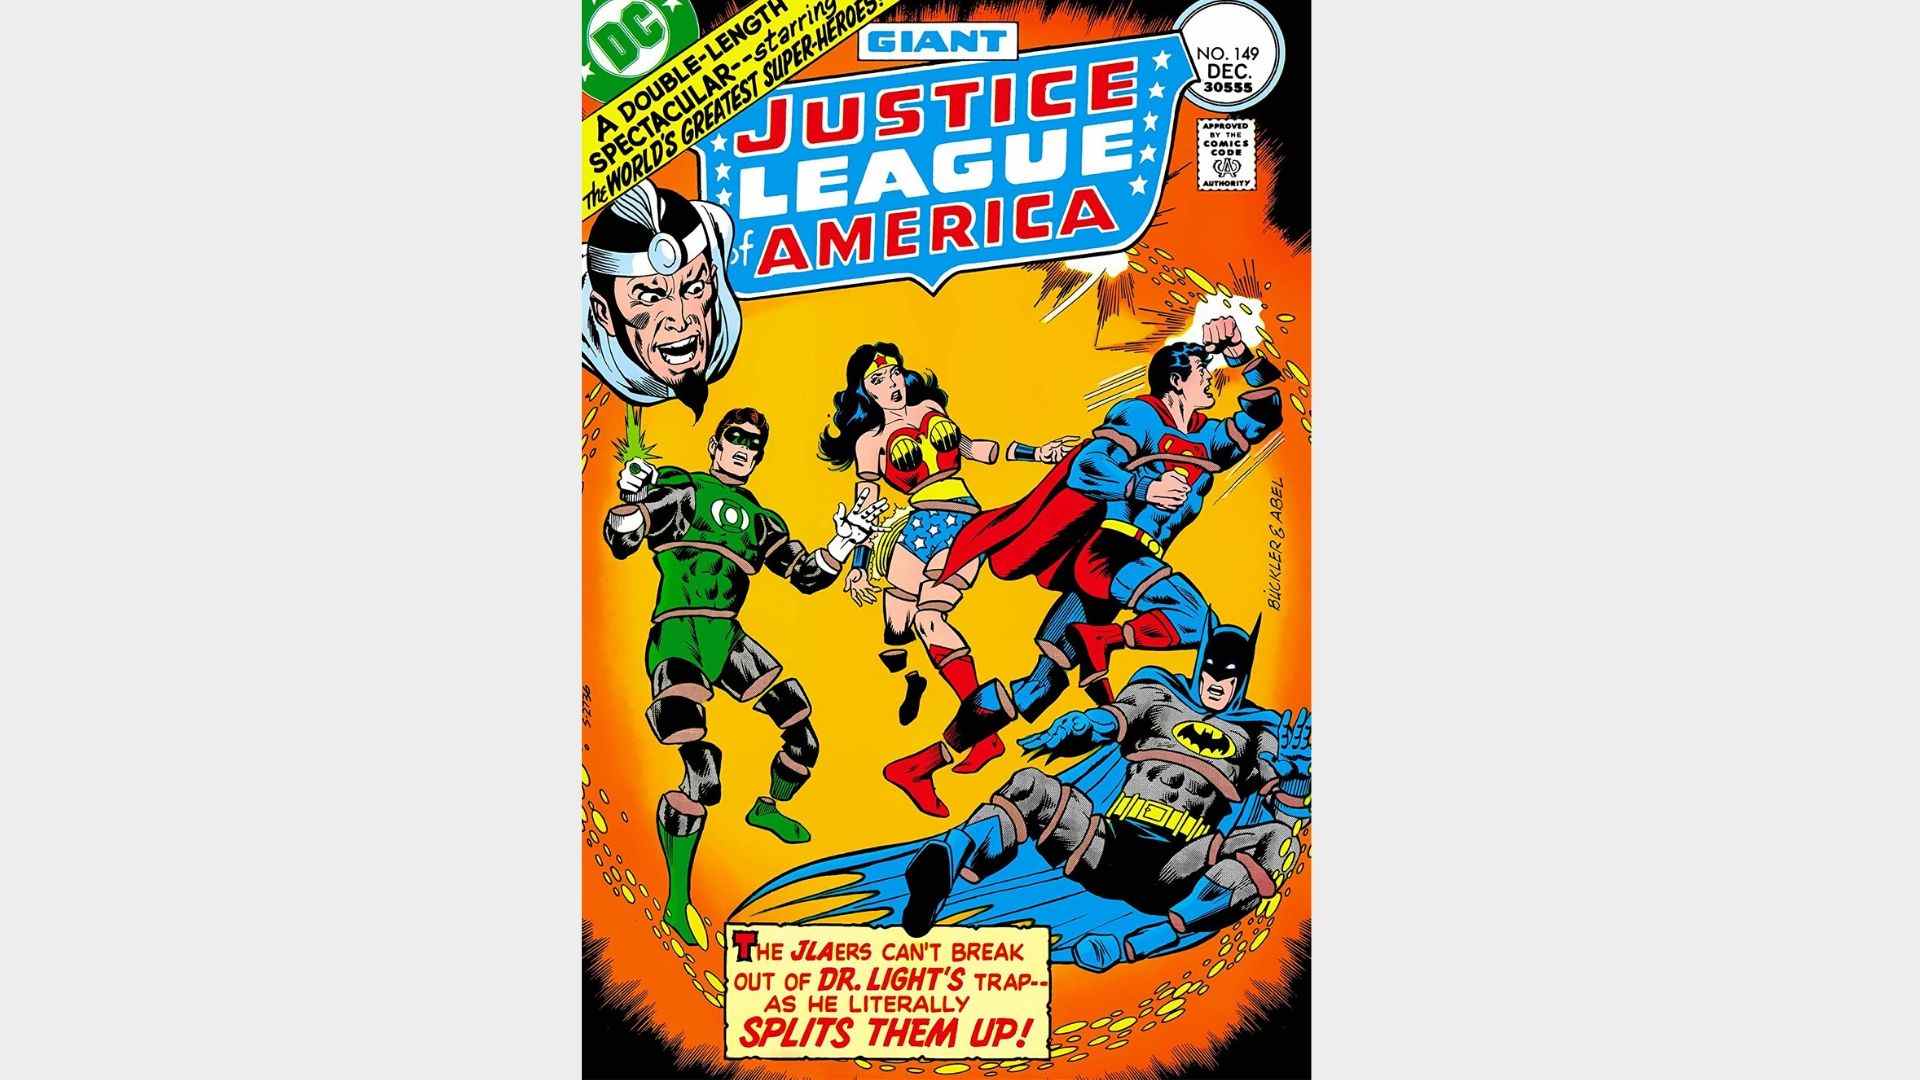 Justice League of America: l'ère des satellites